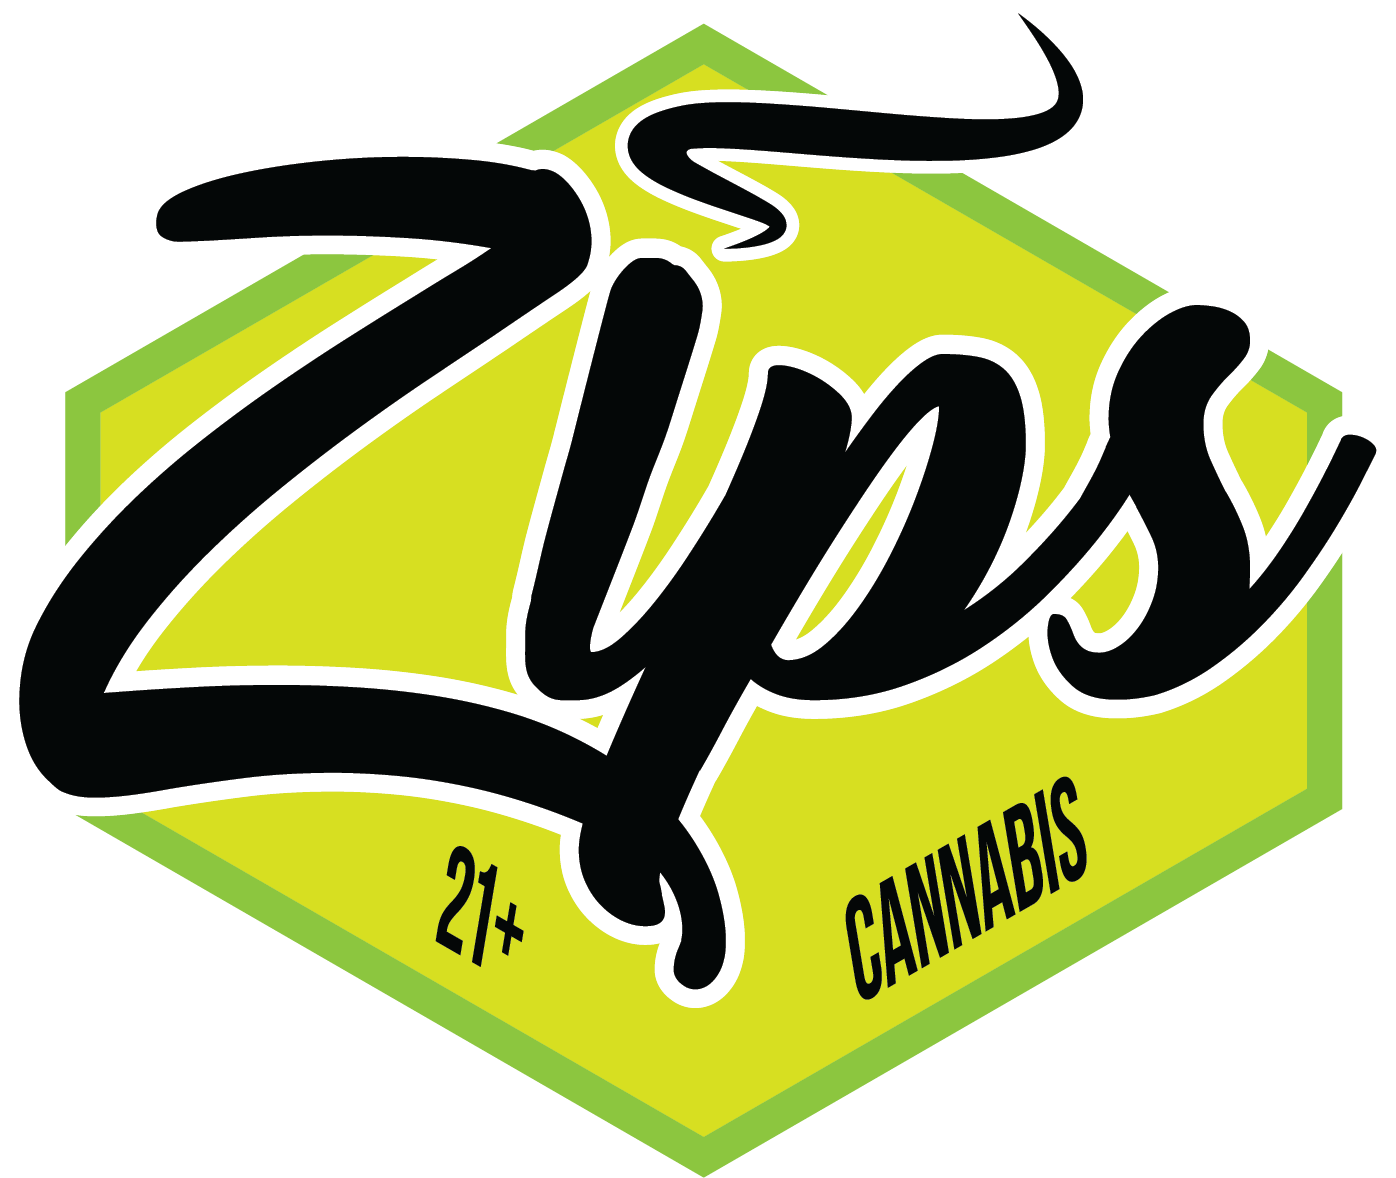 Zips Cannabis Menu - Zips Cannabis (1396x1178)